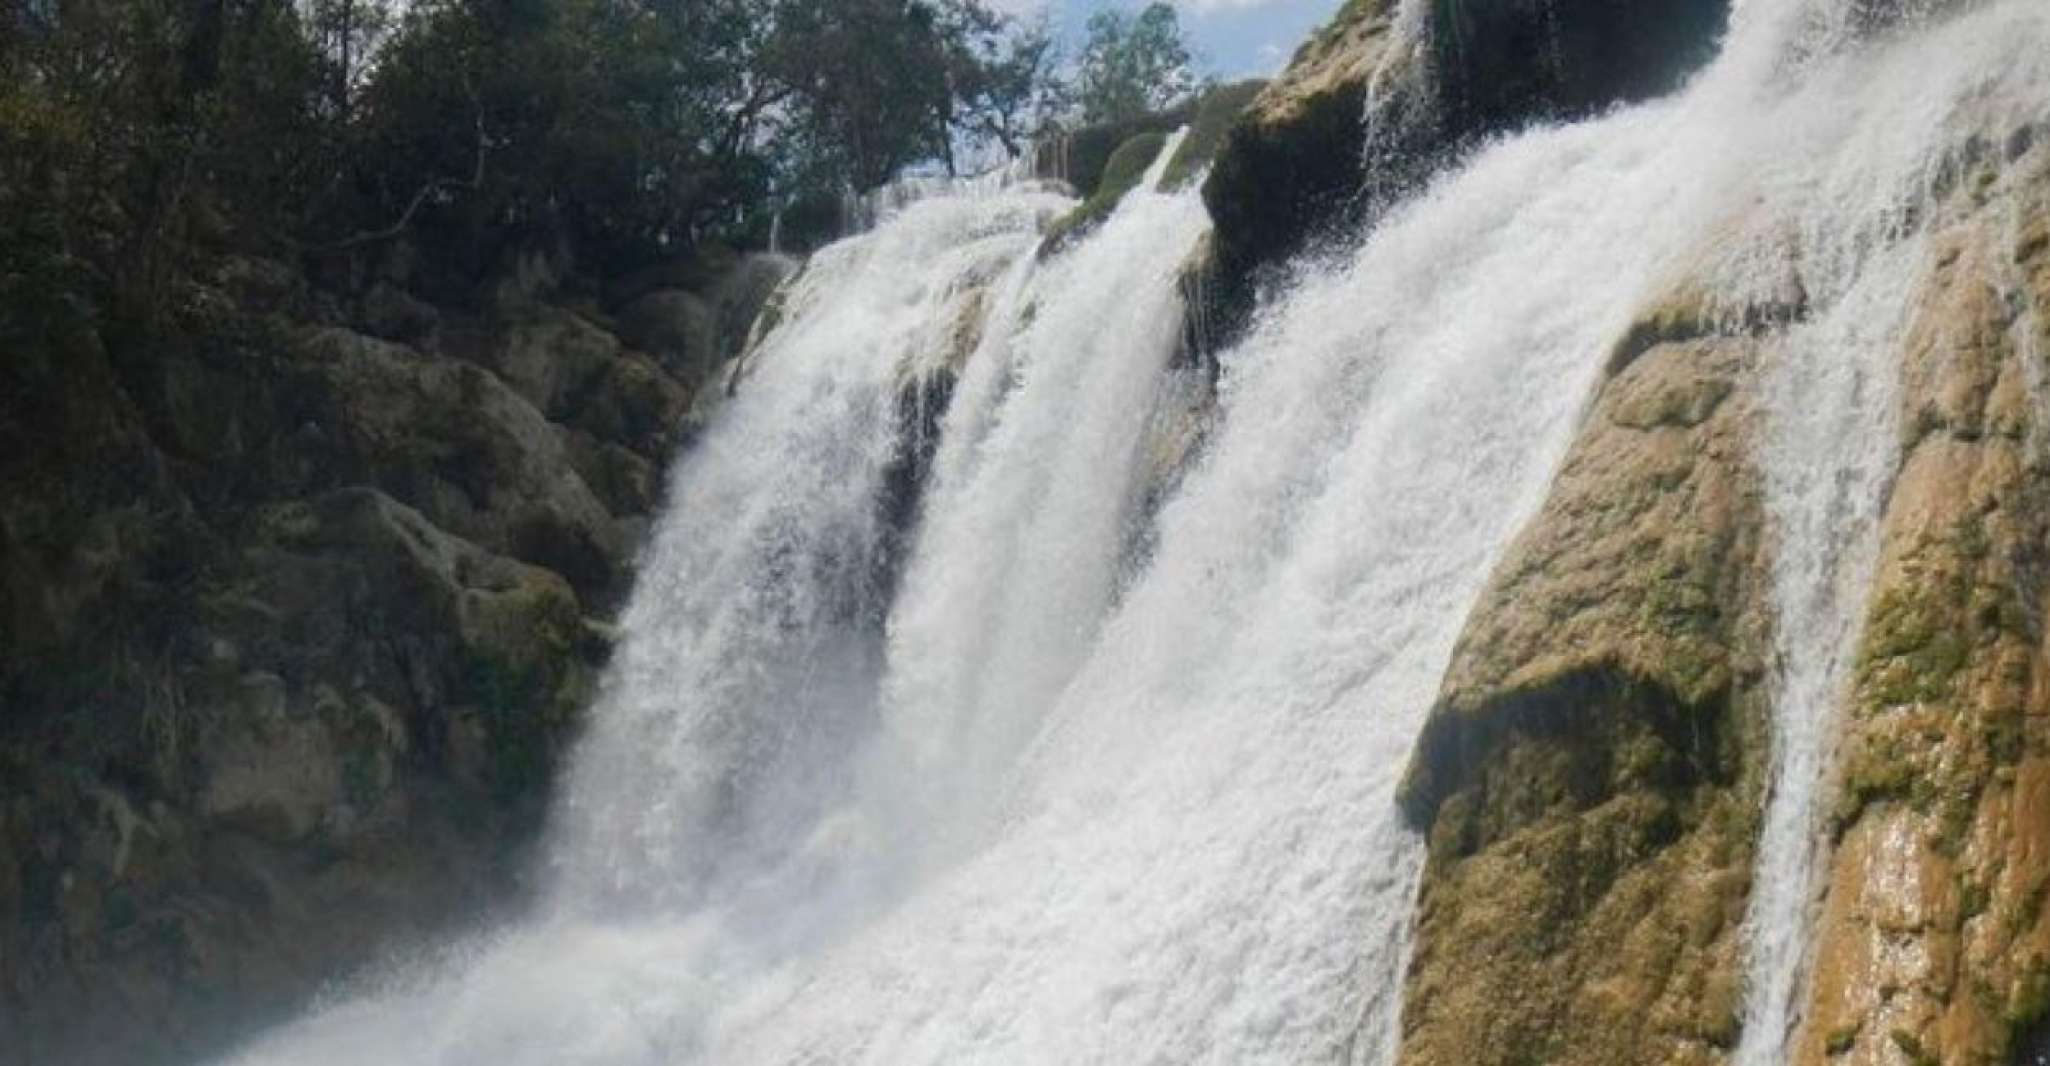 Ciudad Valles, El Meco Waterfall and El Salto Waterfall Tour - Housity